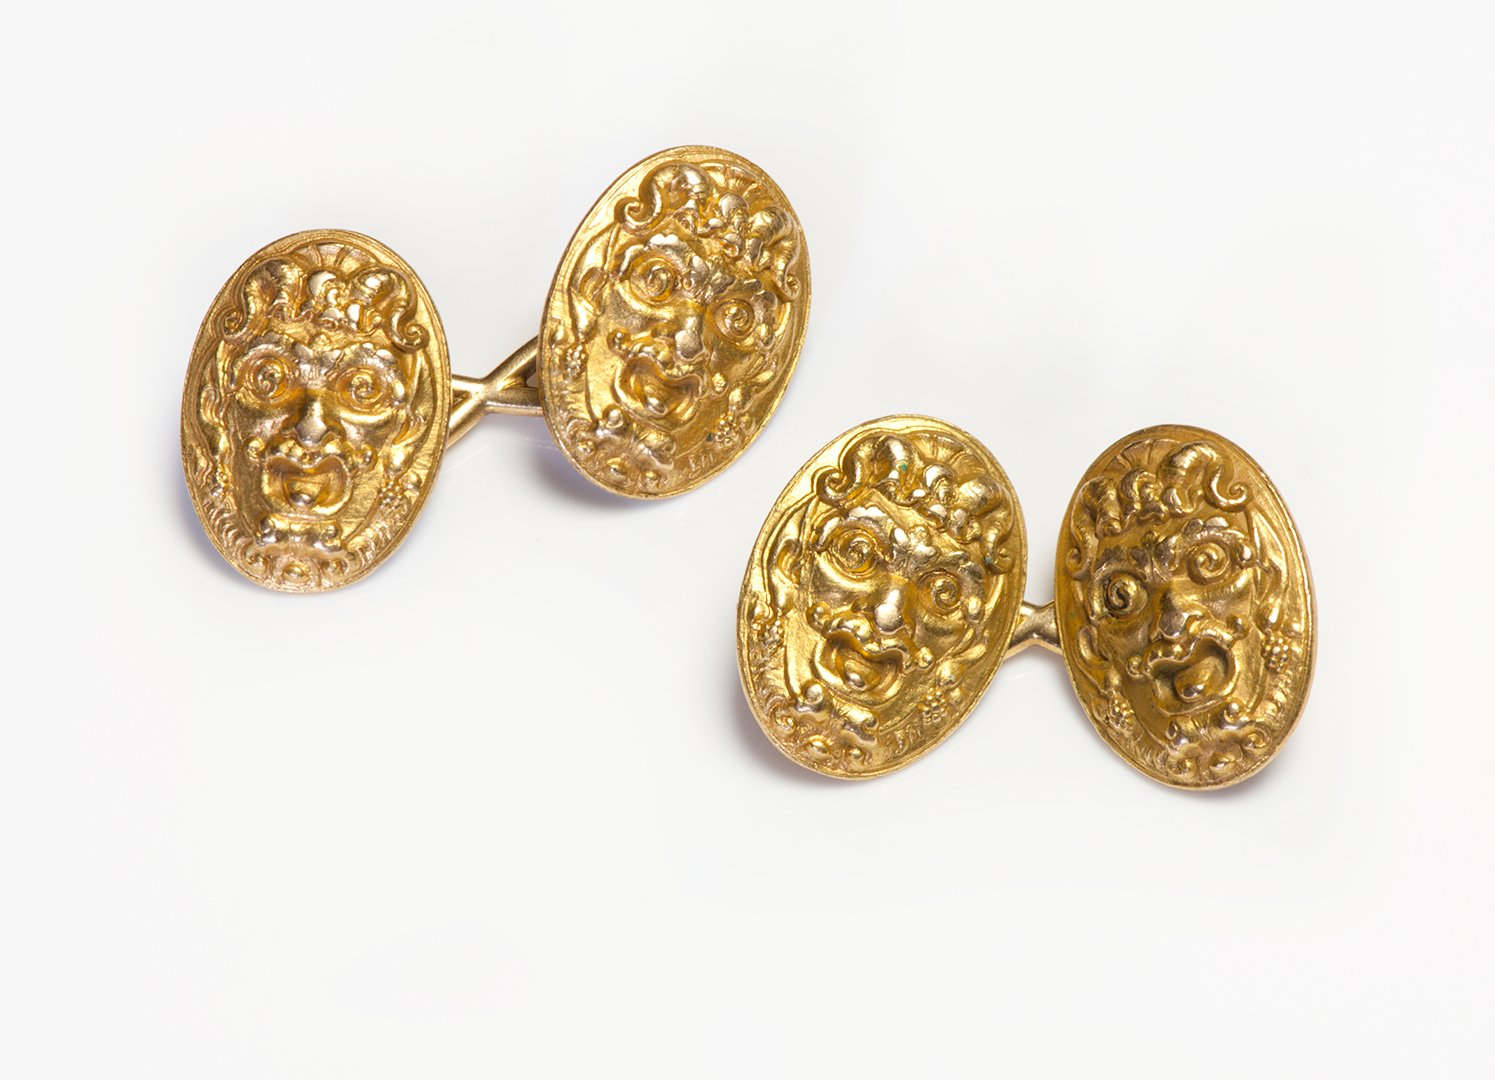 Tiffany & Co. Art Nouveau Gold Mythological Cufflinks